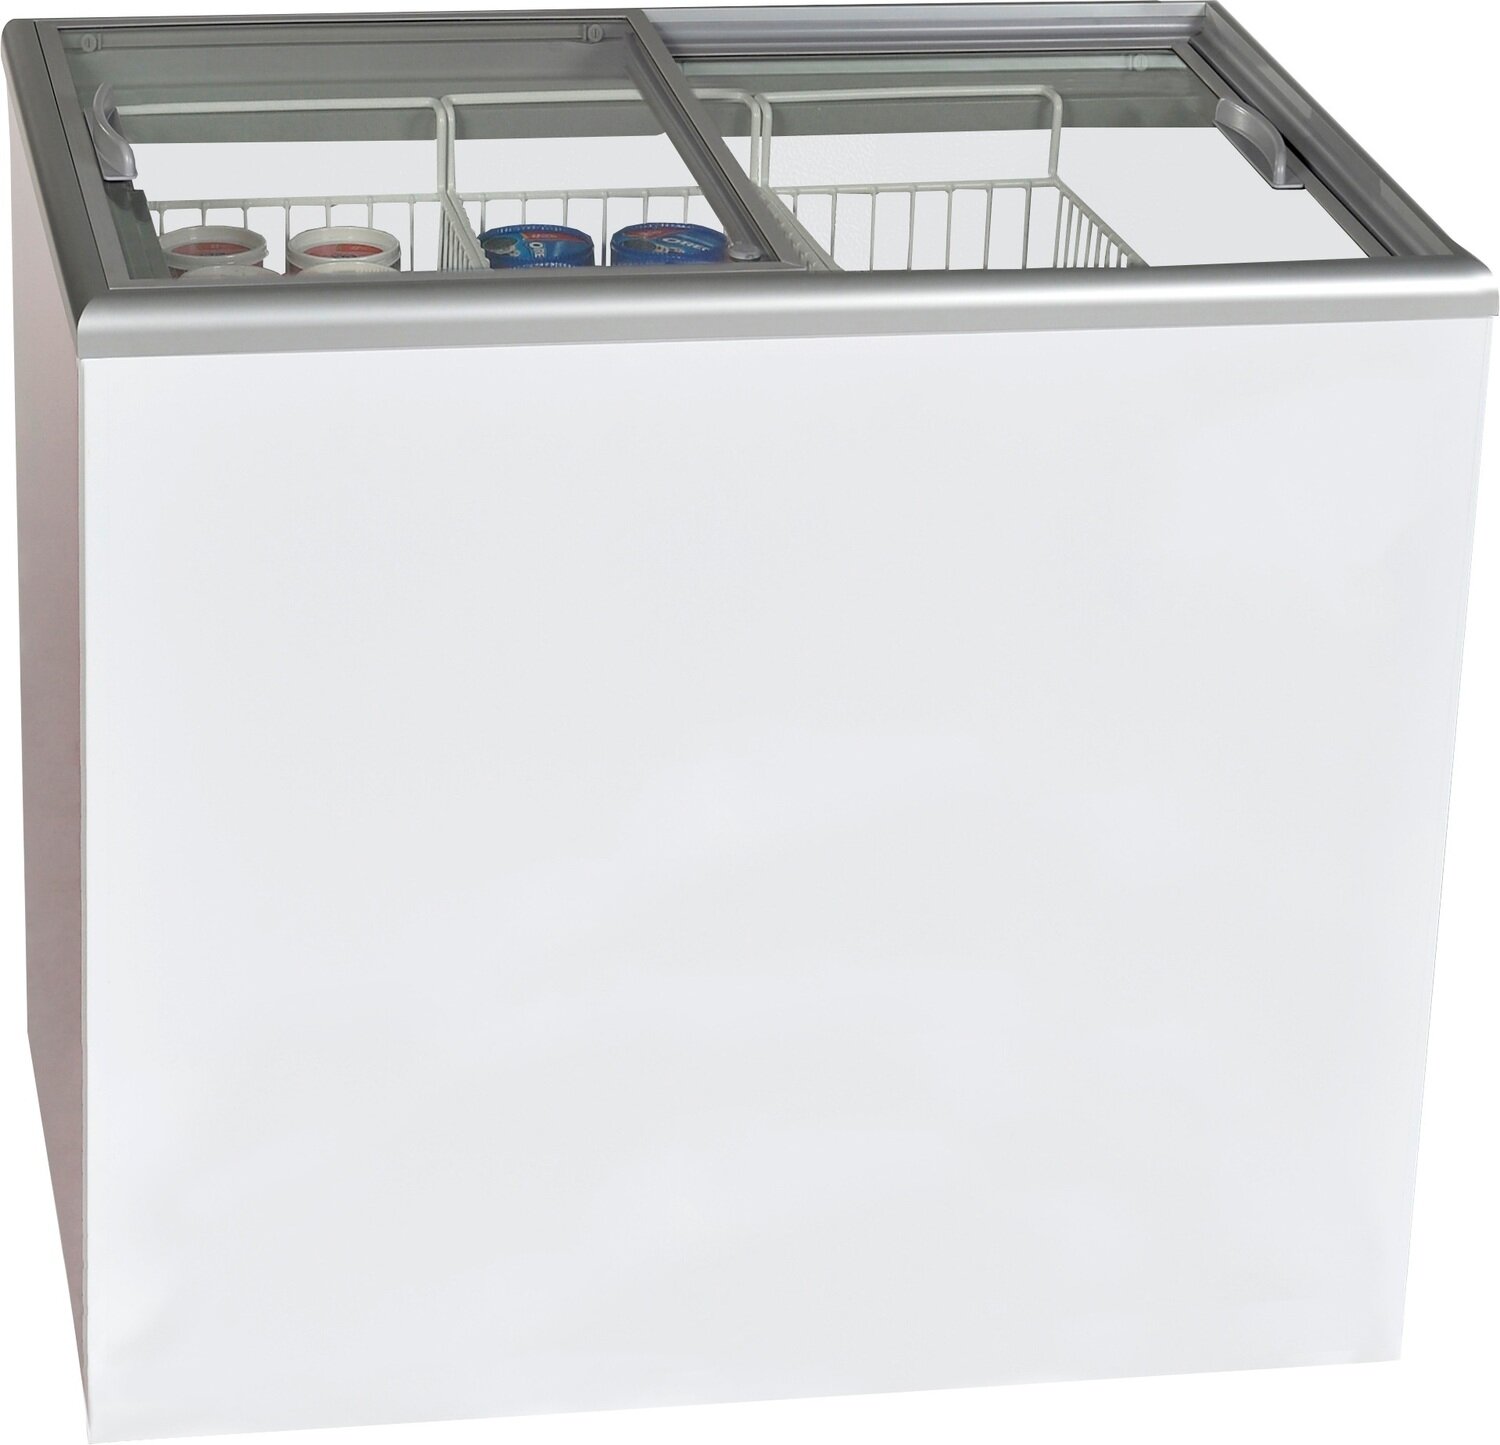 SARO commercial chest freezer with sliding glass lid, model NOVA 35-2BC100A